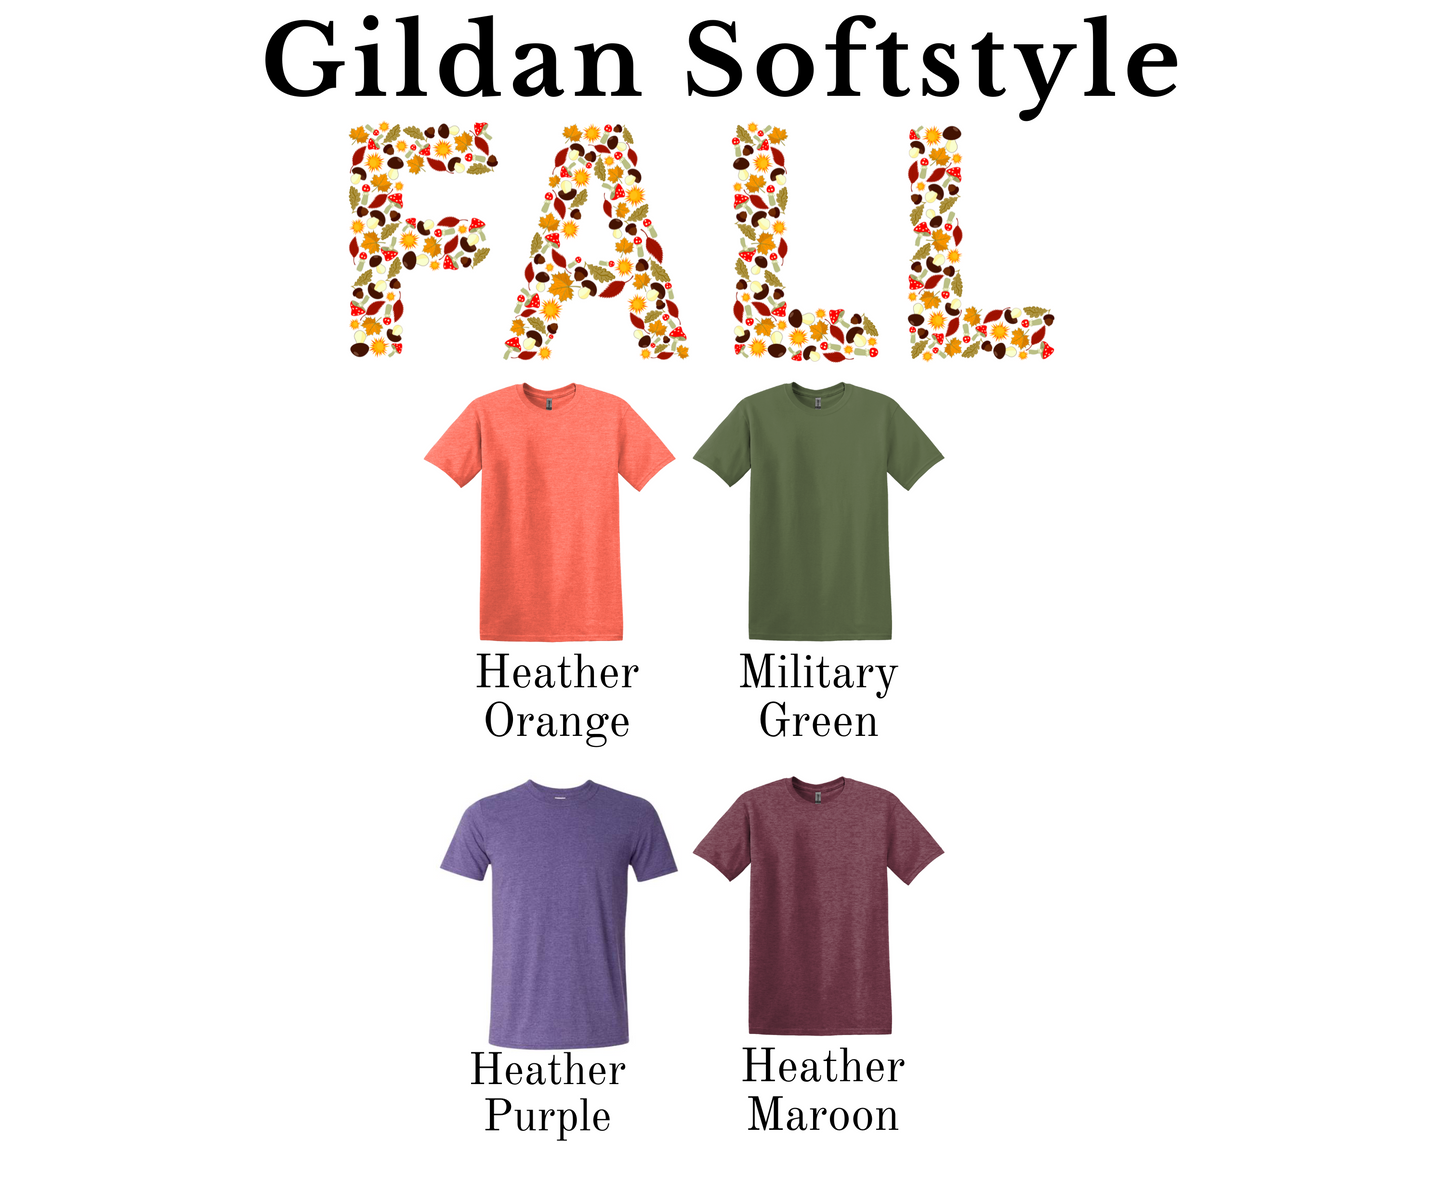 Spooky Vibes Checker Gildan Softstyle T-shirt